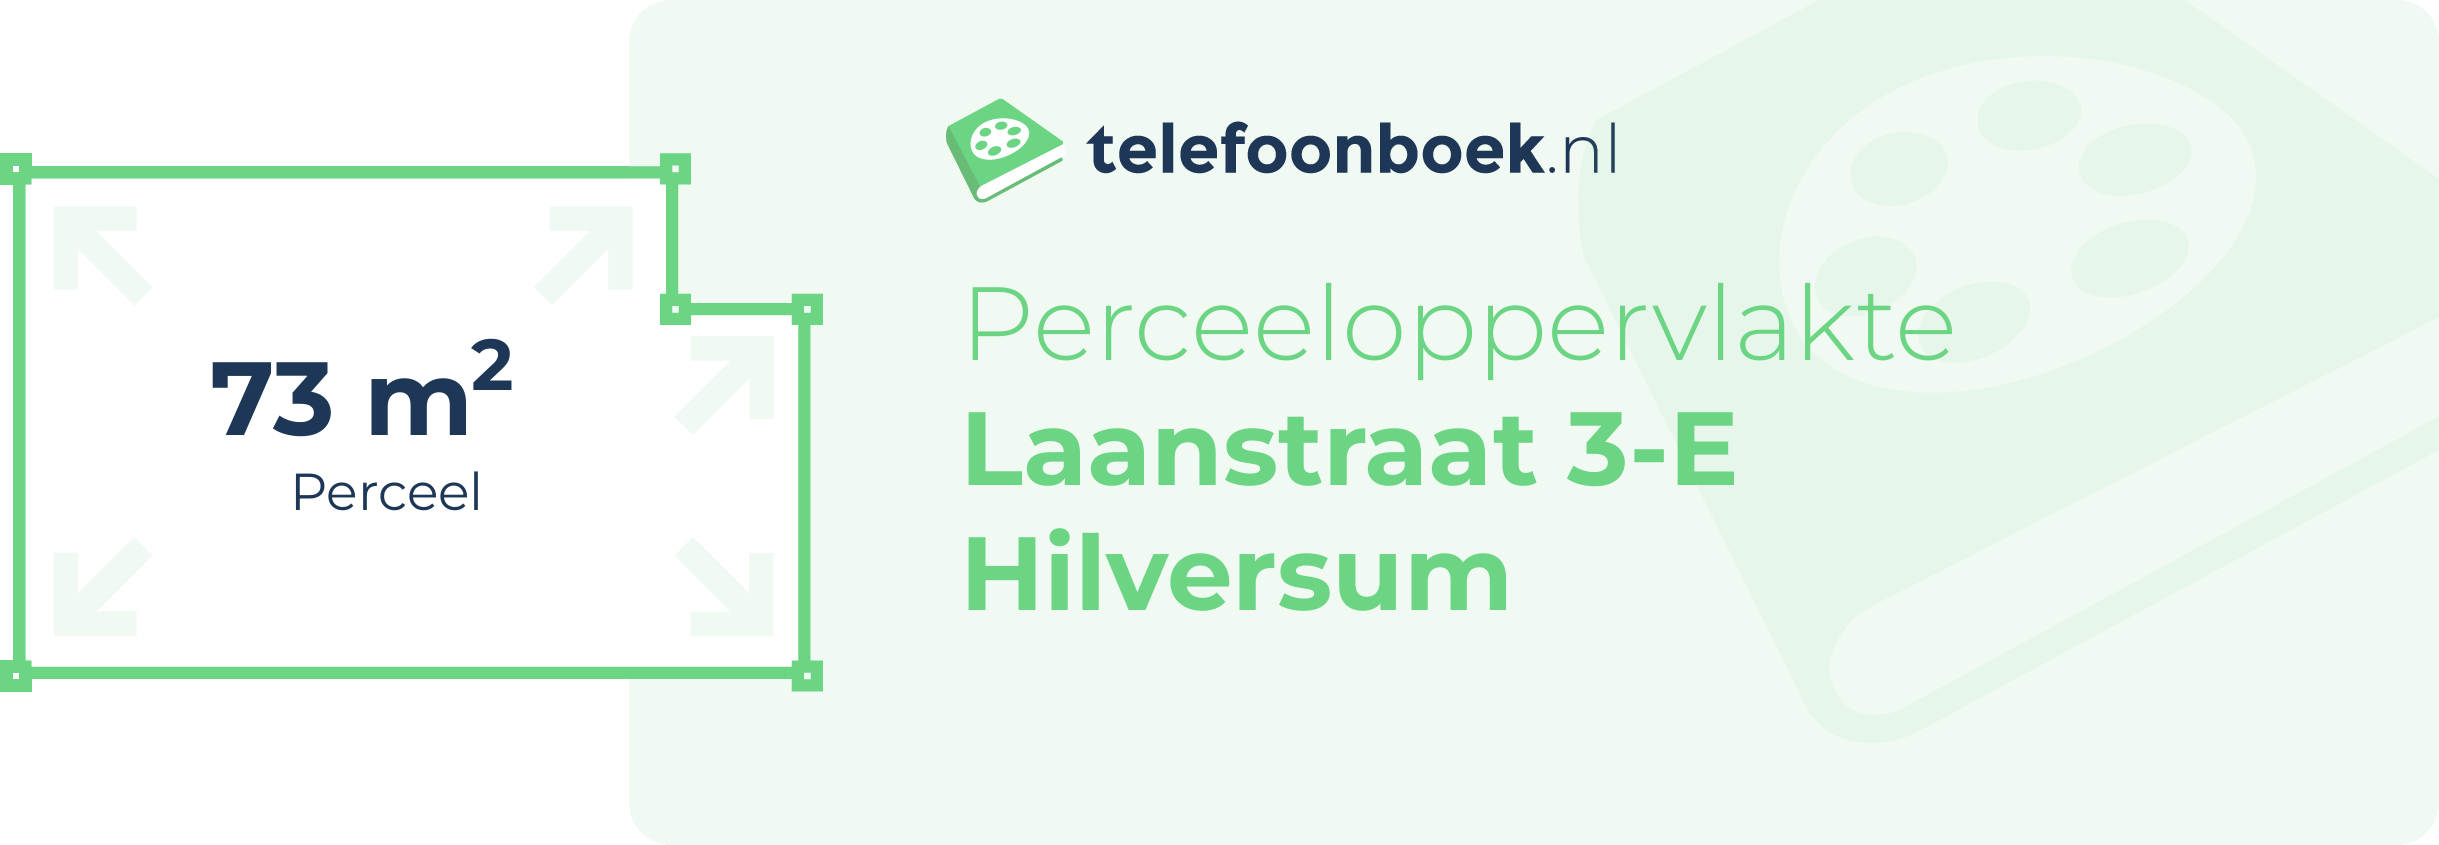 Perceeloppervlakte Laanstraat 3-E Hilversum